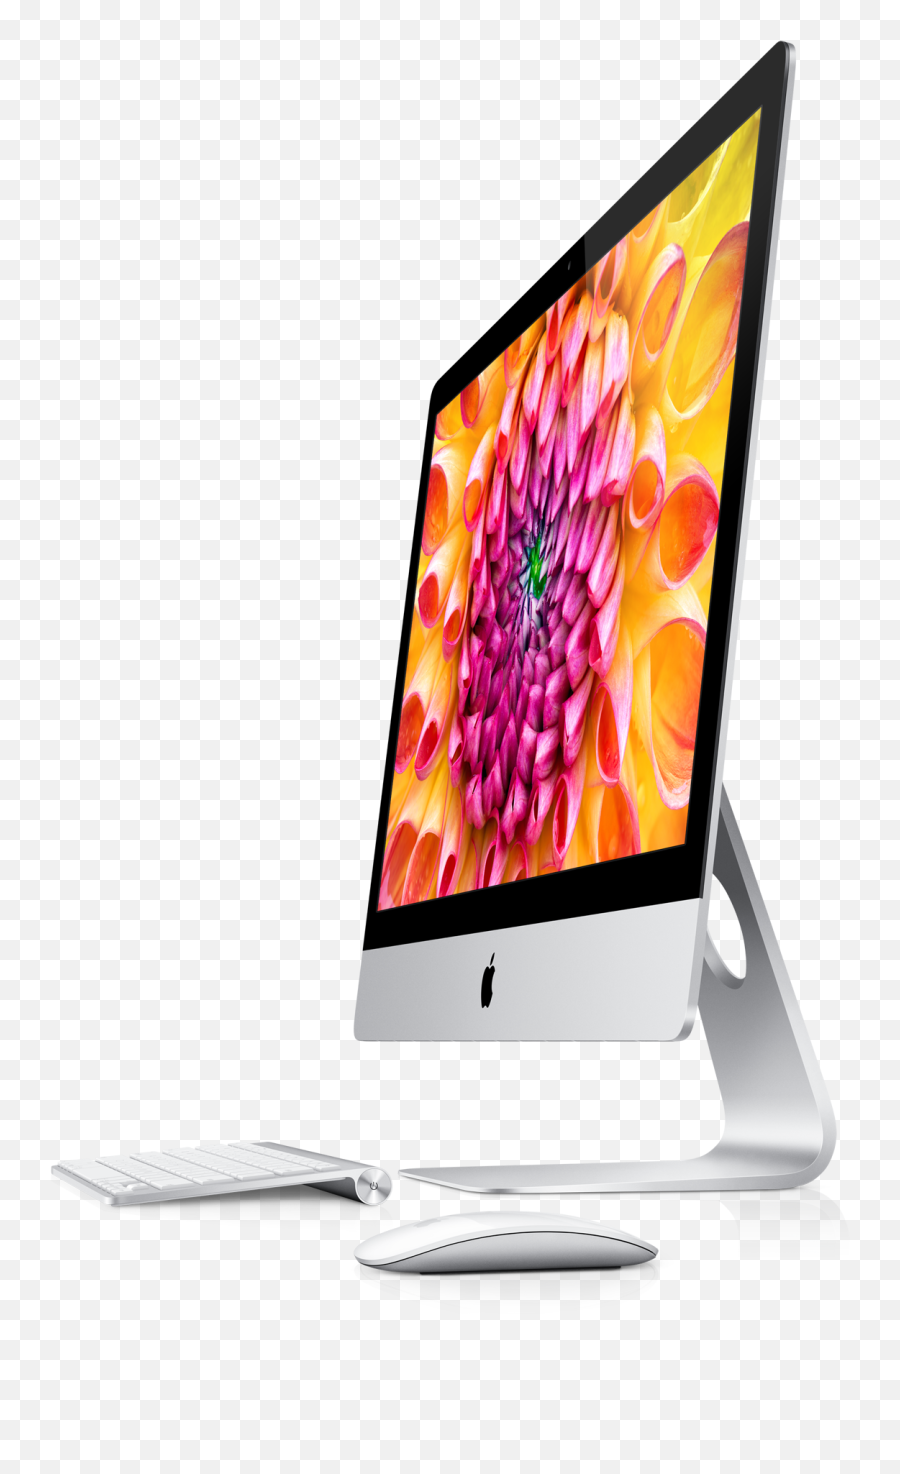 Apple Mac - Apple Imac Transparent Background Emoji,Emoji Keyboard For Computers